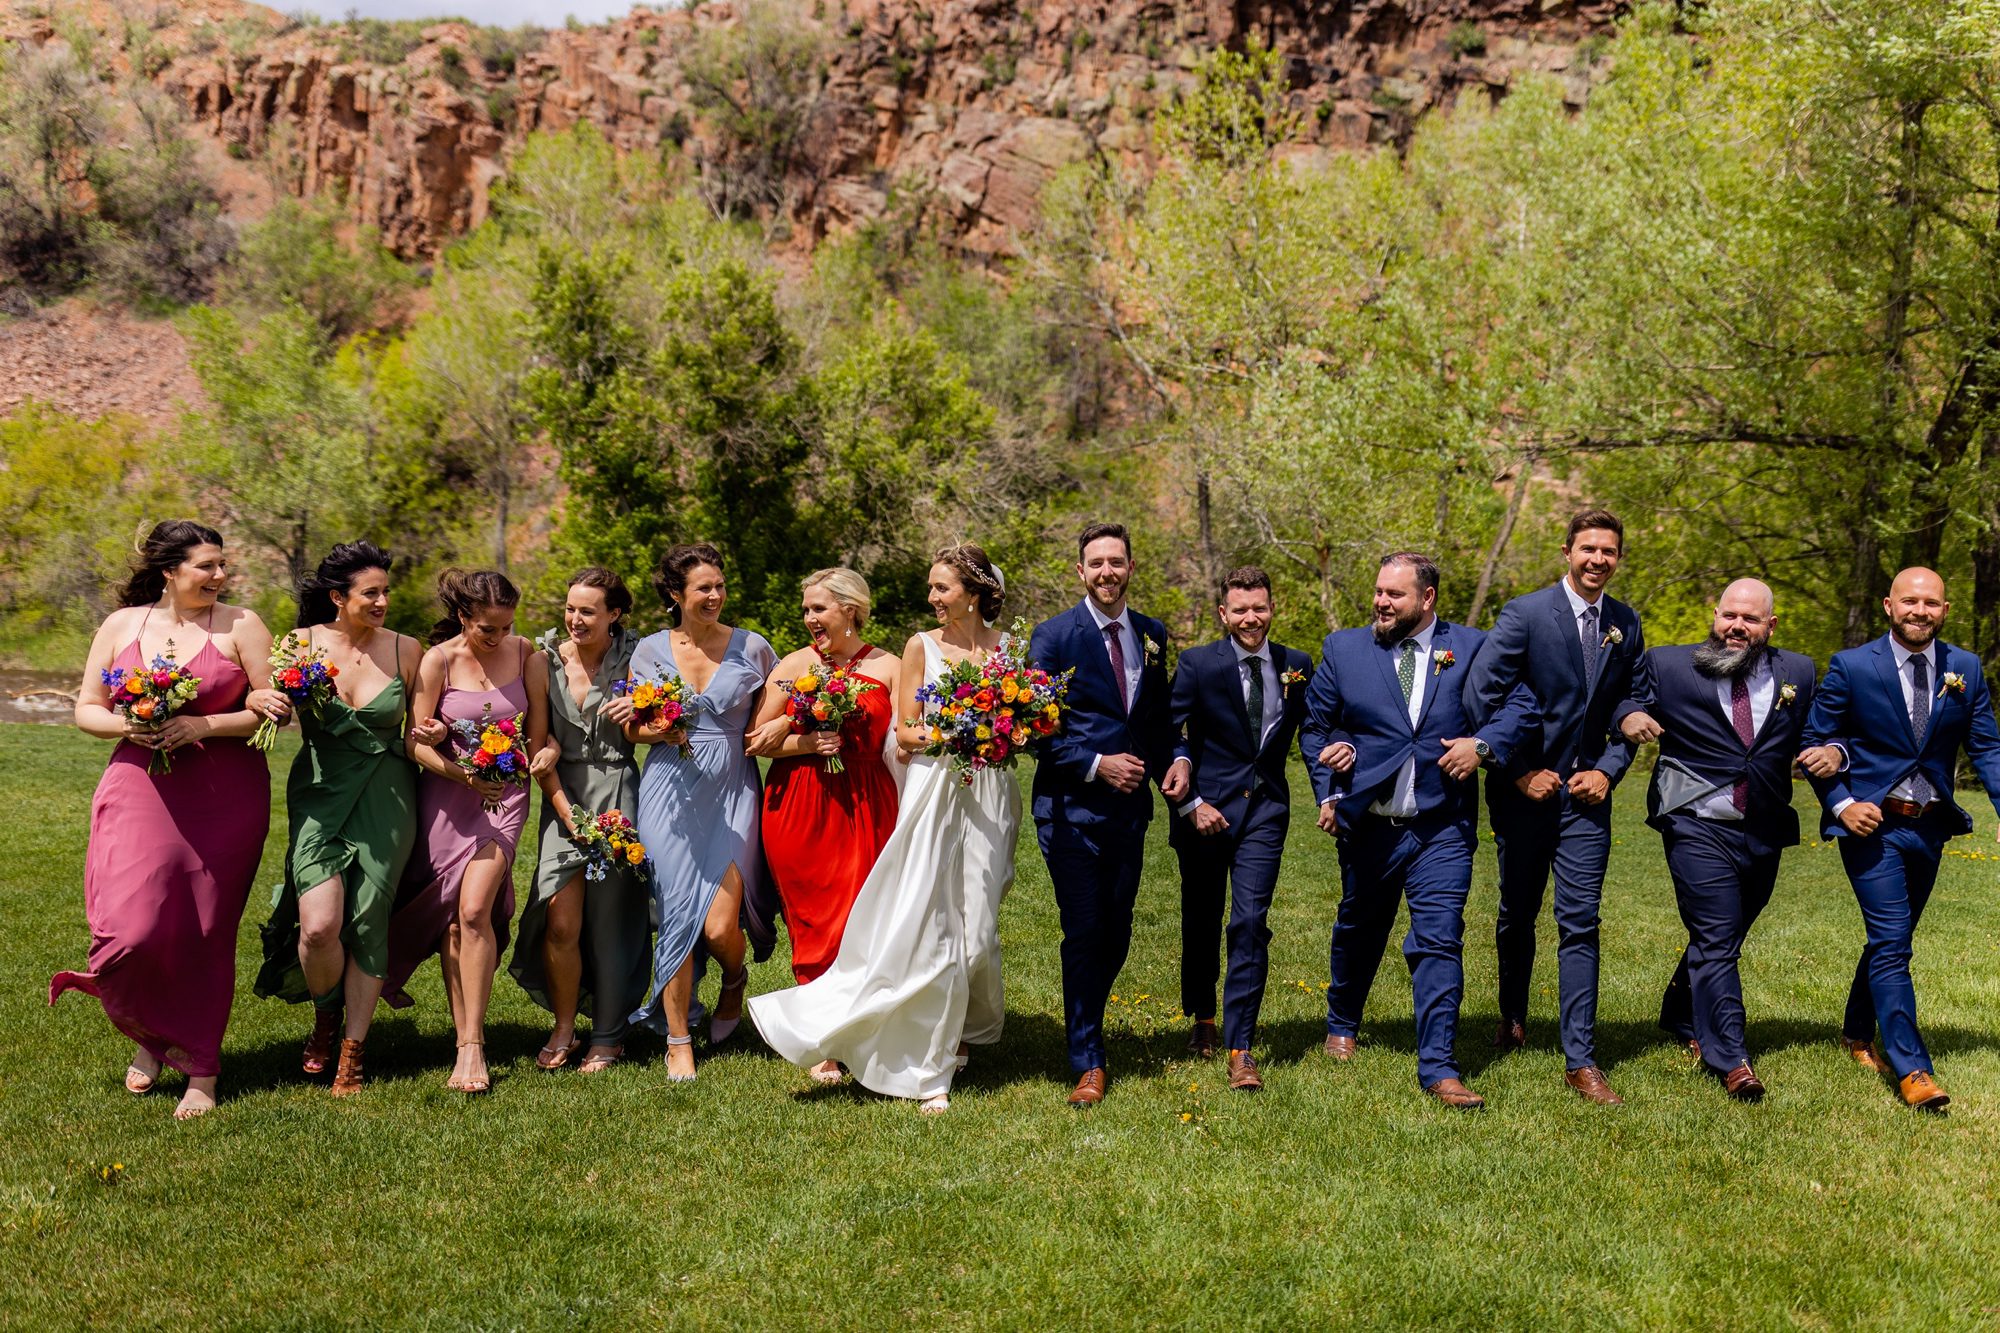 Planet Bluegrass Wedding venue in Lyons Colorado: Colorado Wedding Photographer, Bridesmaids photos, Groomsmen photos, Bridal party photos, Bridesmaids dresses, Groomsmen suits, Wedding flowers